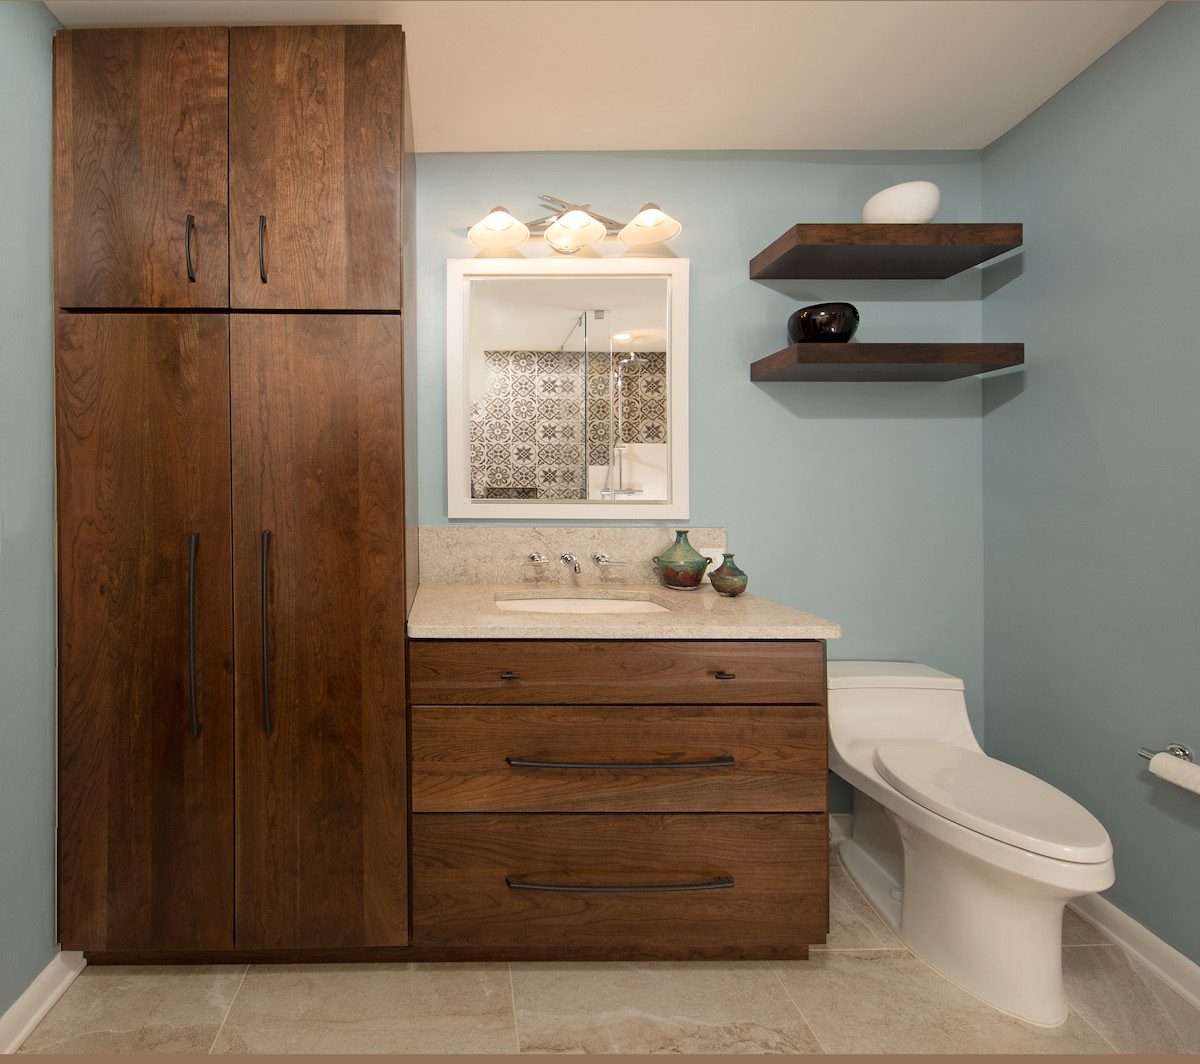 bathroom-renovation-blue-teal-walls-natural-wood-cabinets